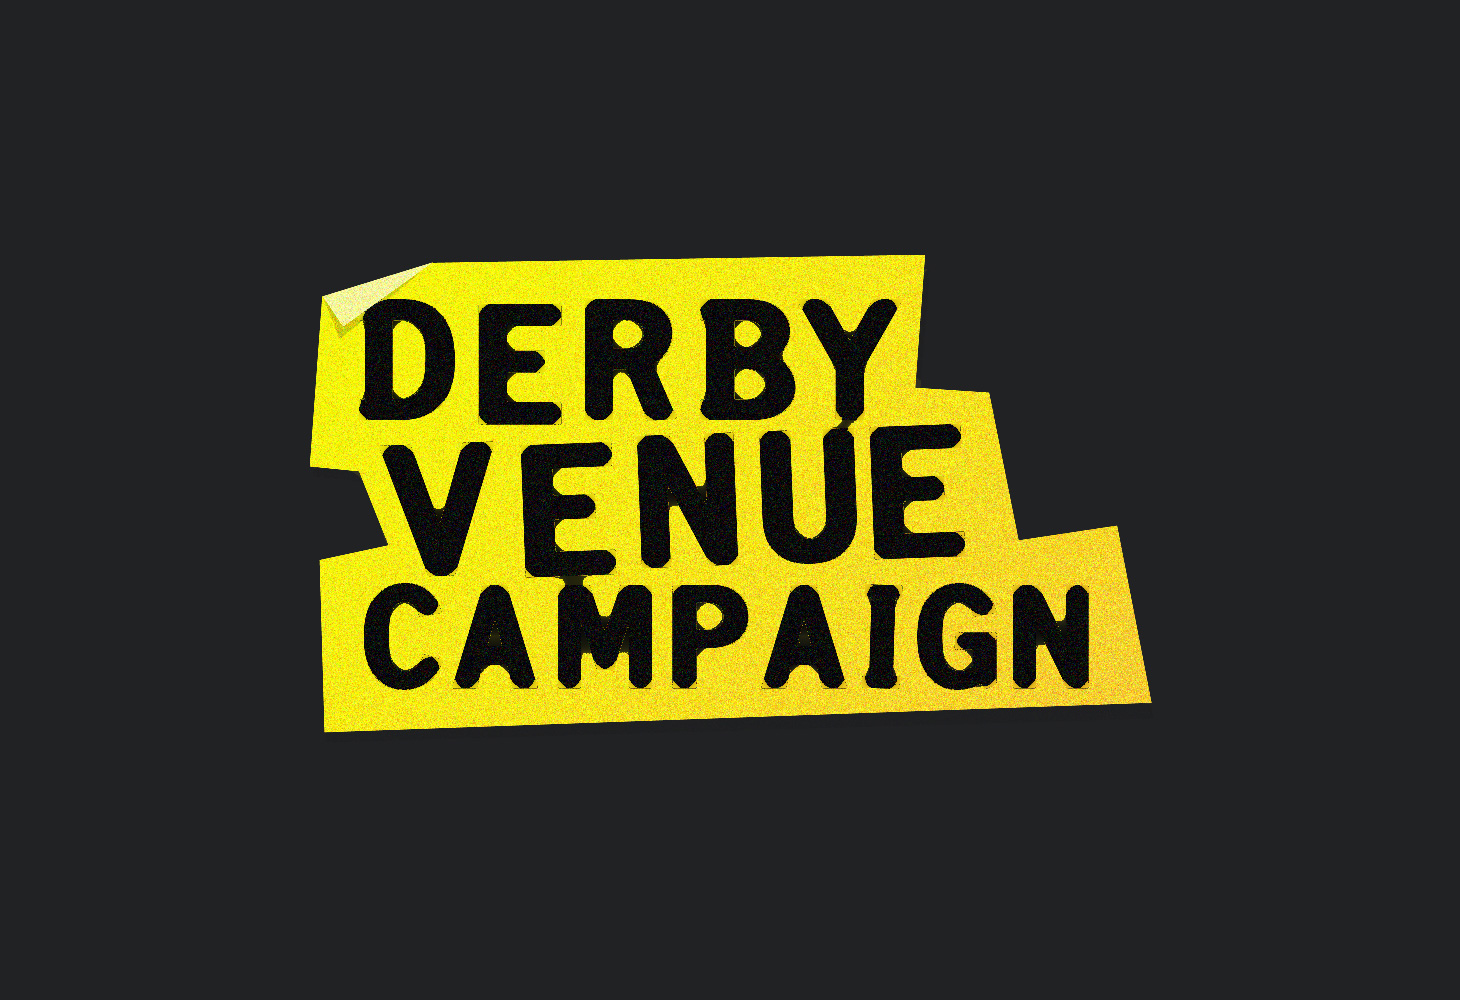 Derby Venue Campaign - Identity - Brick wall